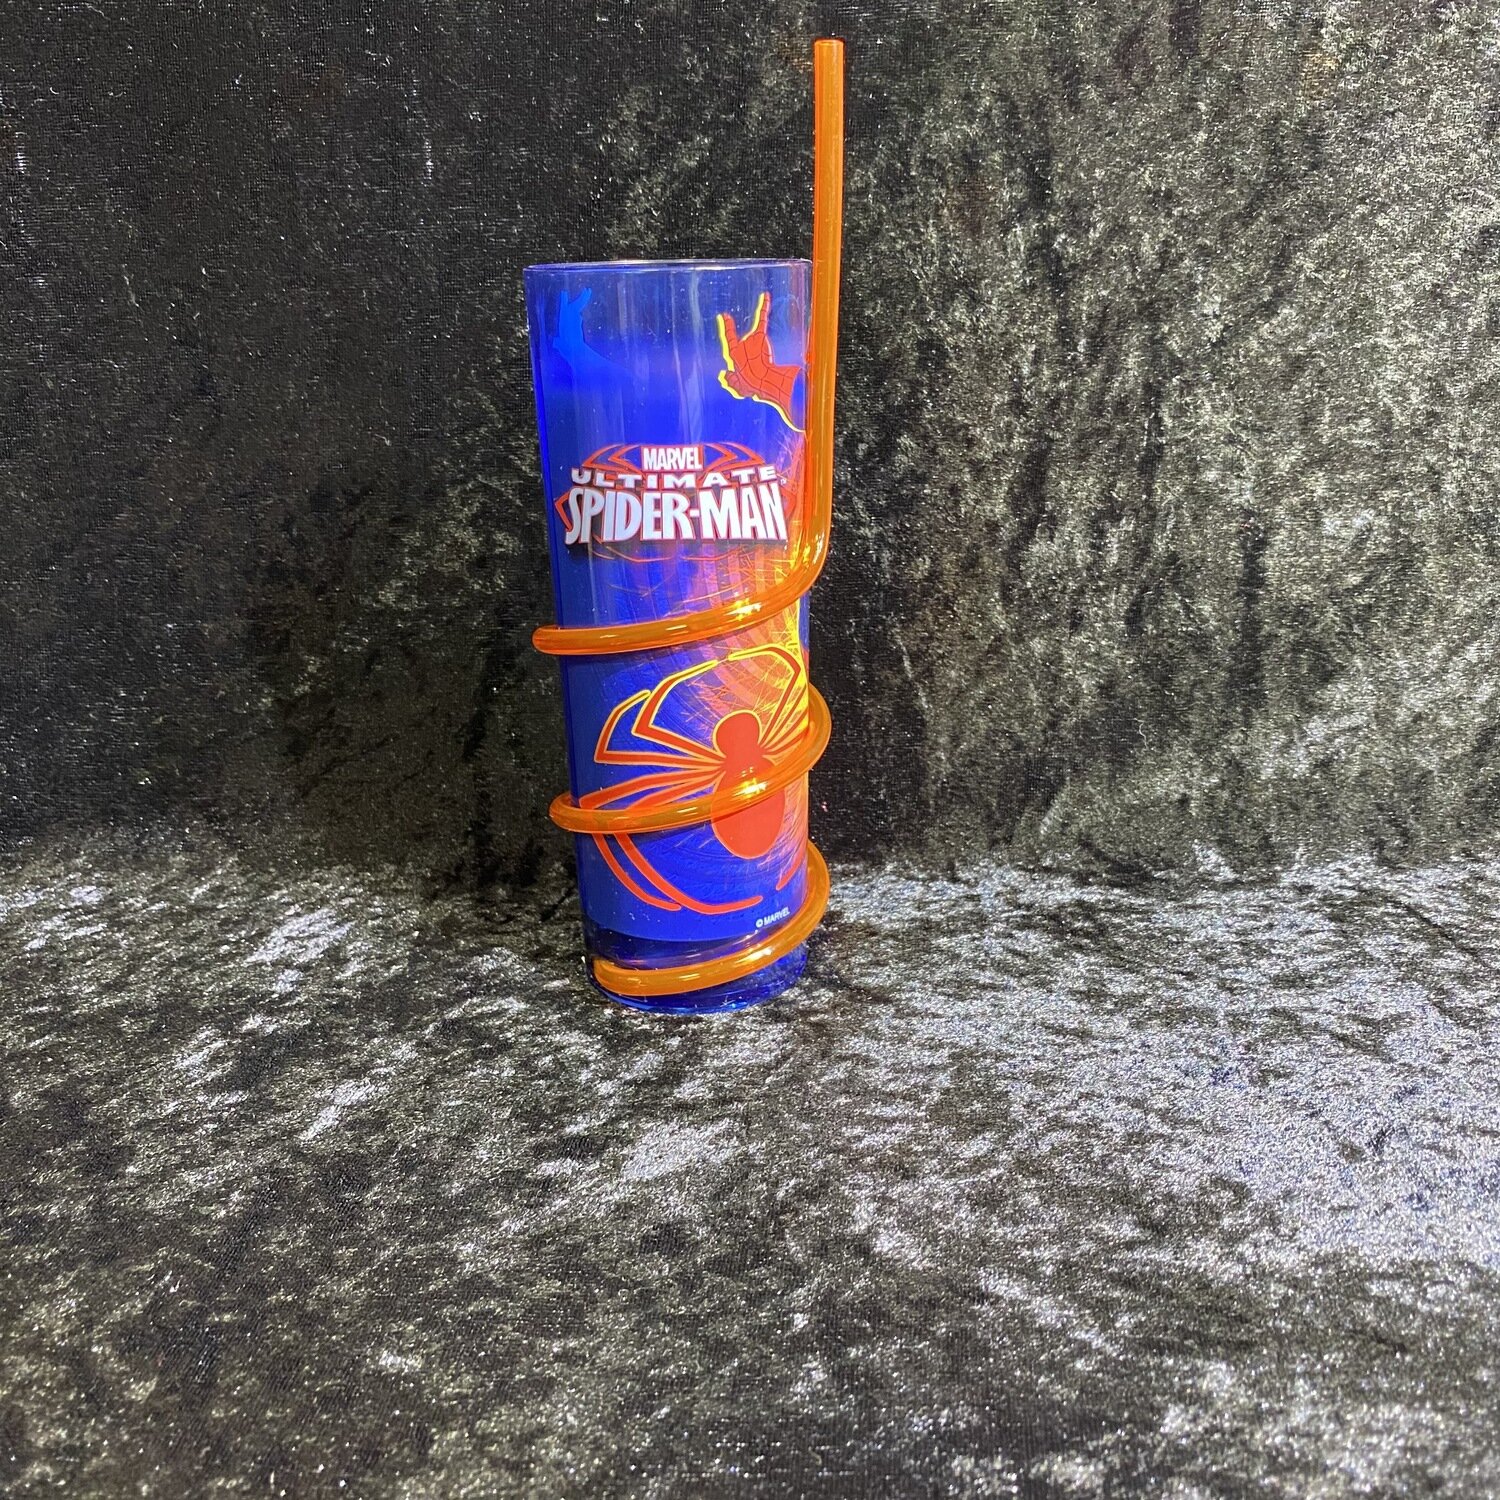 Gobelet pic paille decor spiderman